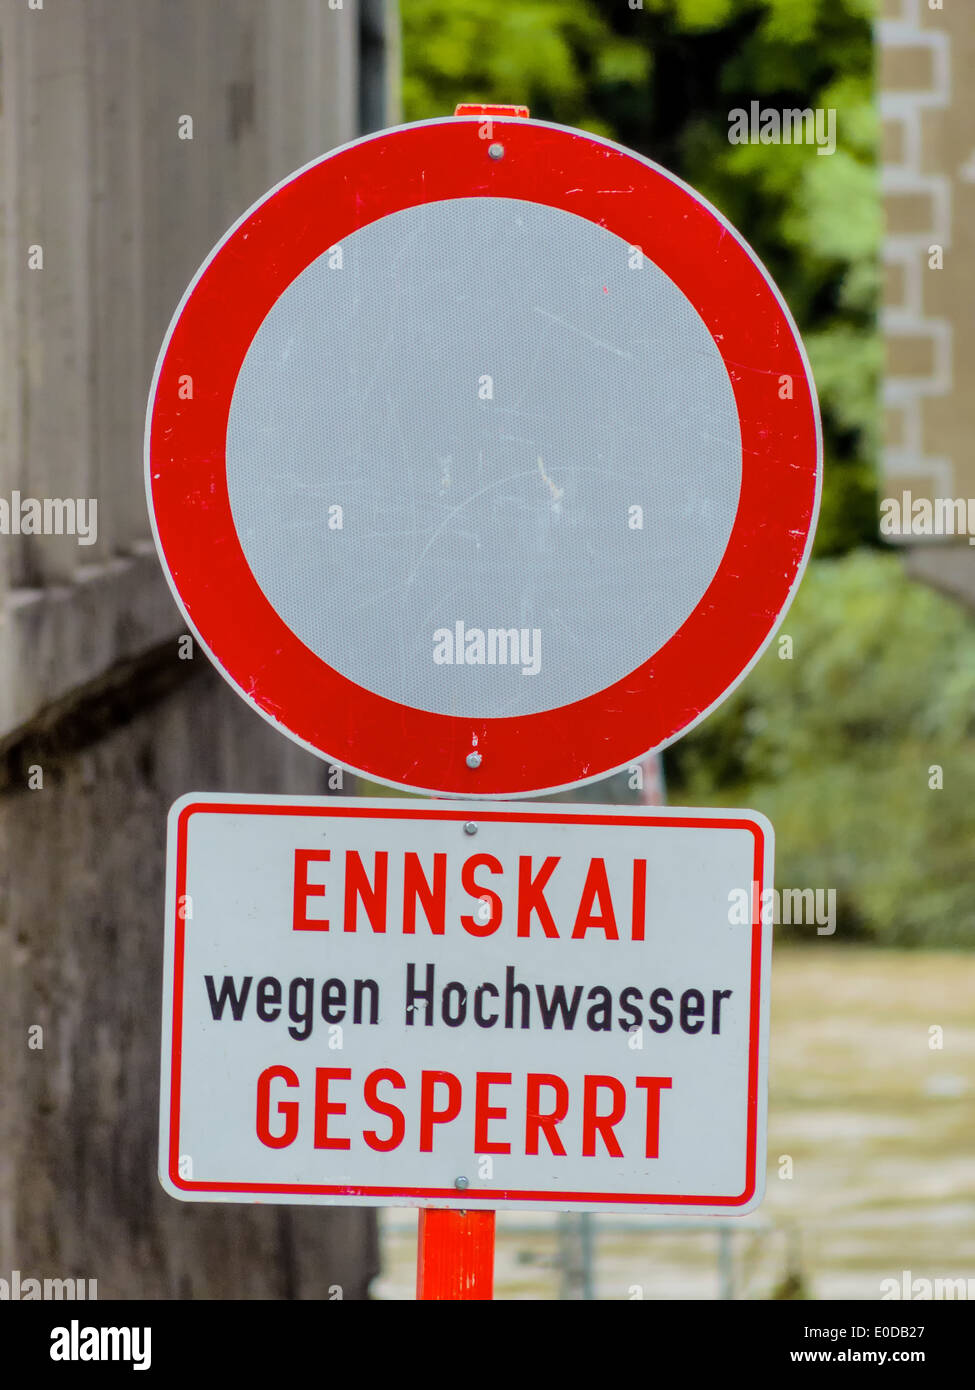 L'acqua alta in 2013 a Steyr, ? Sterreich. ? ? ? Berflutungen e ? ? ? Berschwemmungen, Hochwasser 2013 a Steyr, ÷sterreich. "B Foto Stock